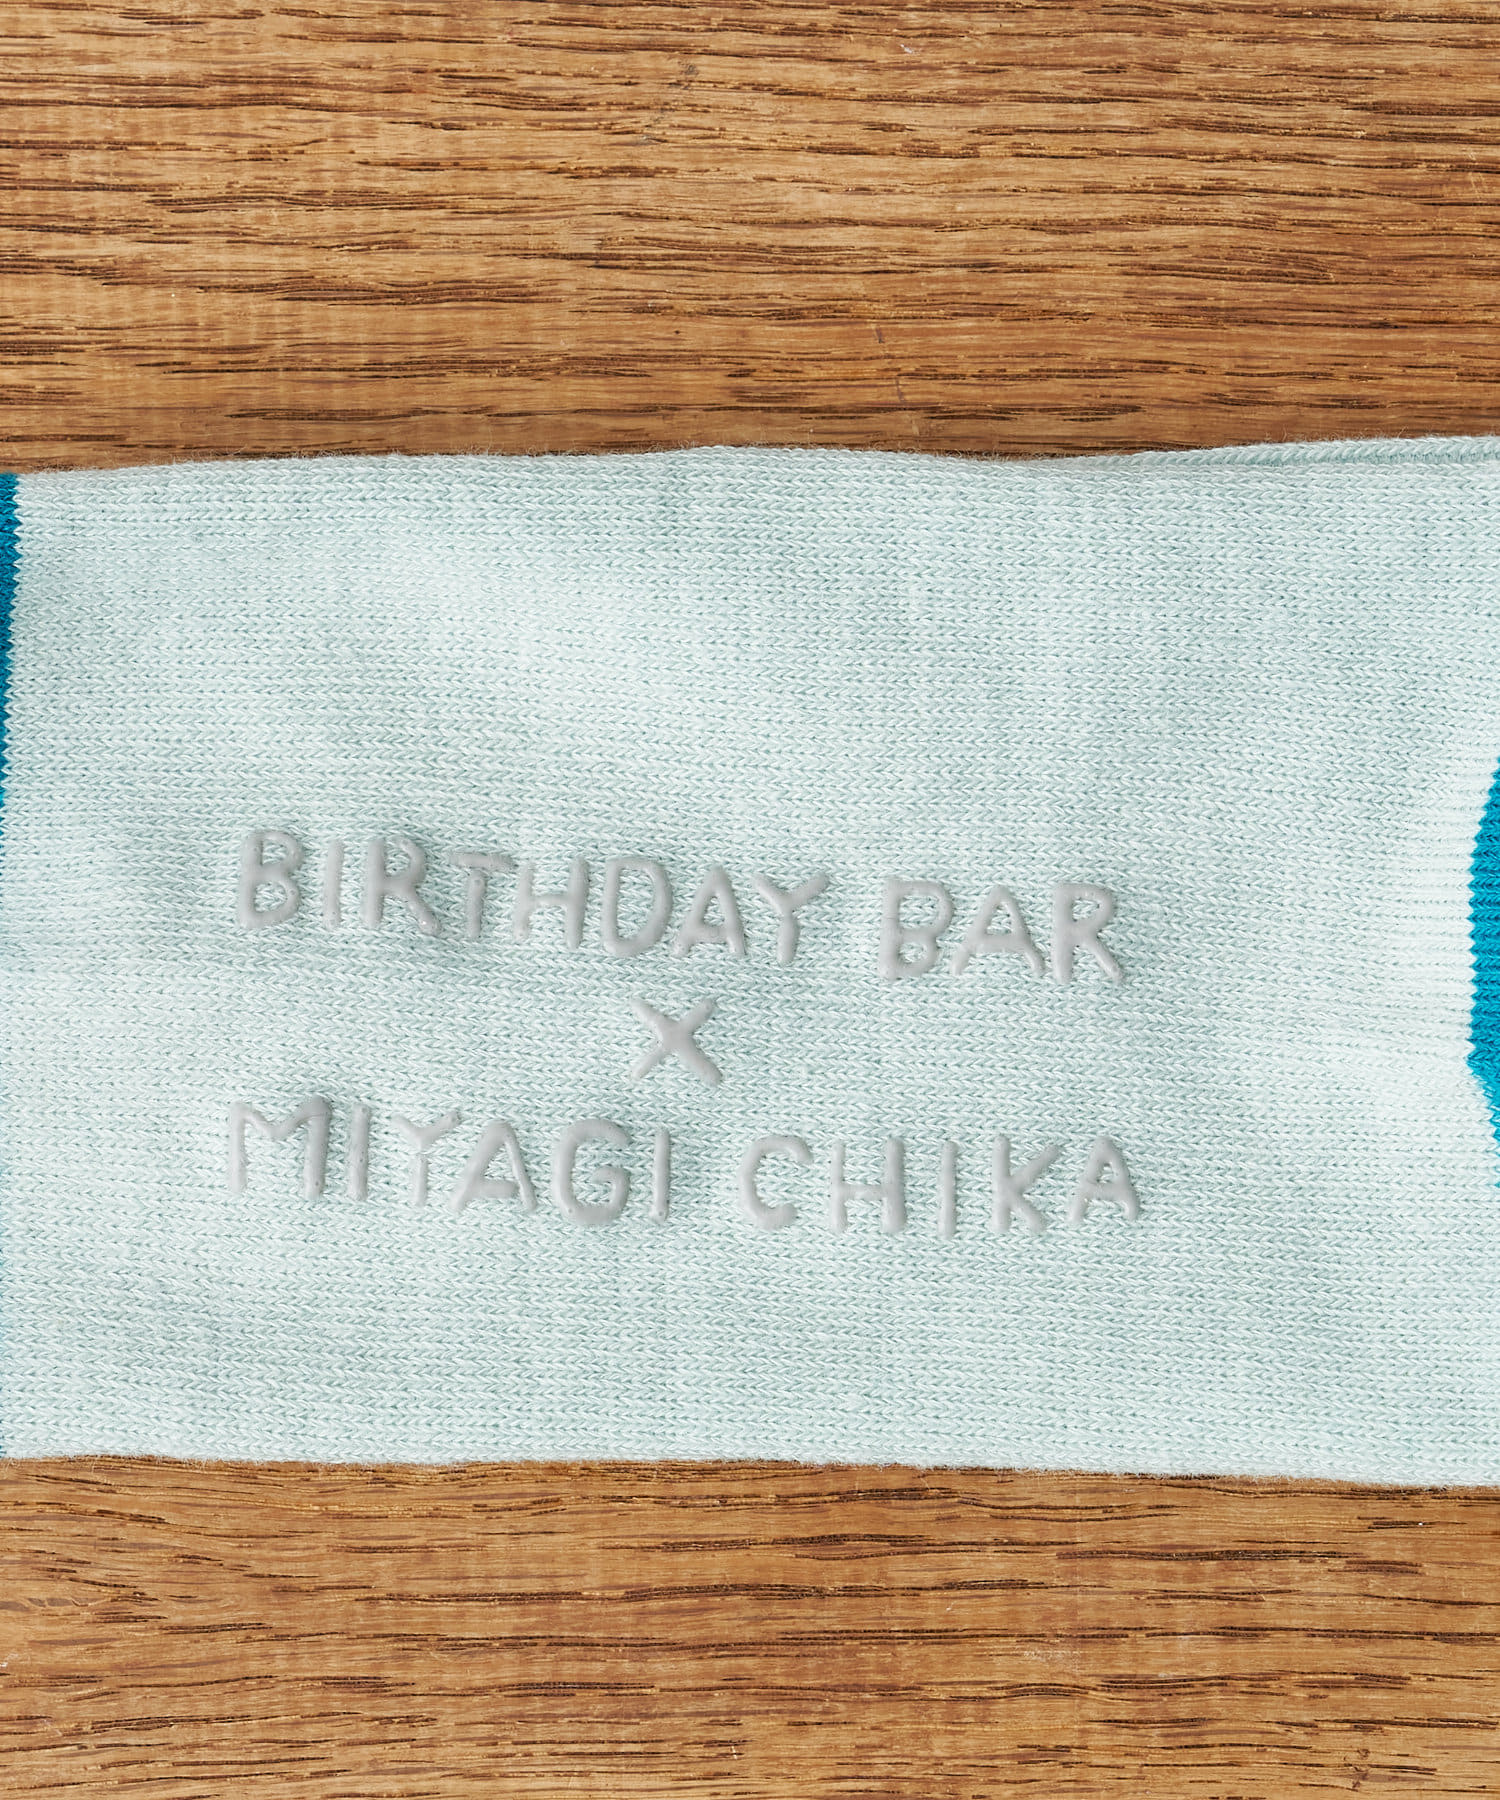 BIRTHDAY BAR(バースデイバー) 【みやぎちか×BIRTHDAY BAR】刺繍バイカラーソックス